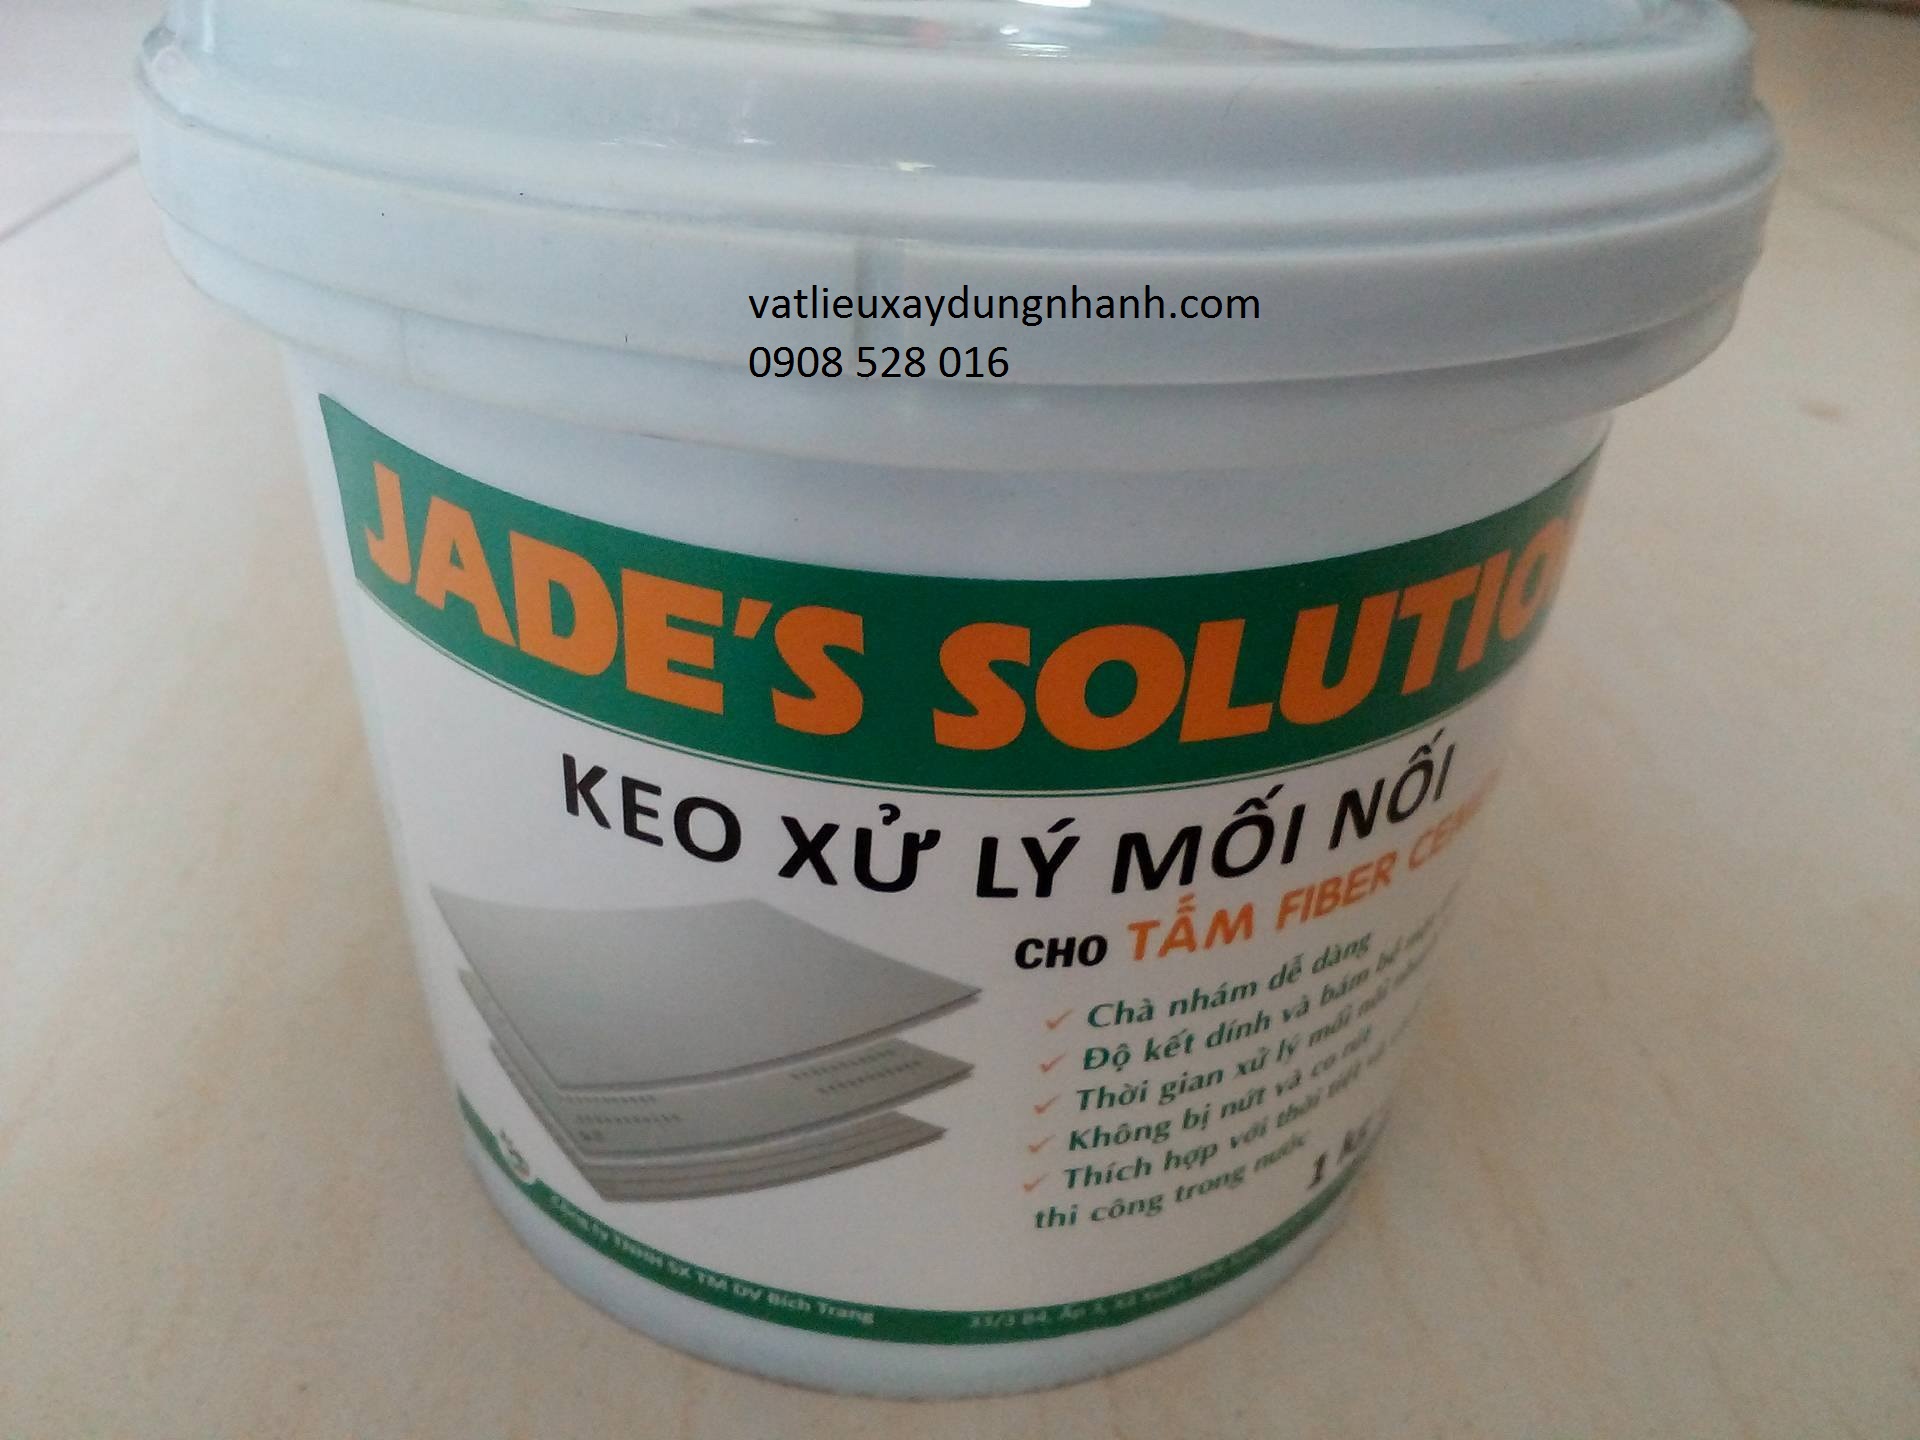 keo-jade's-solution